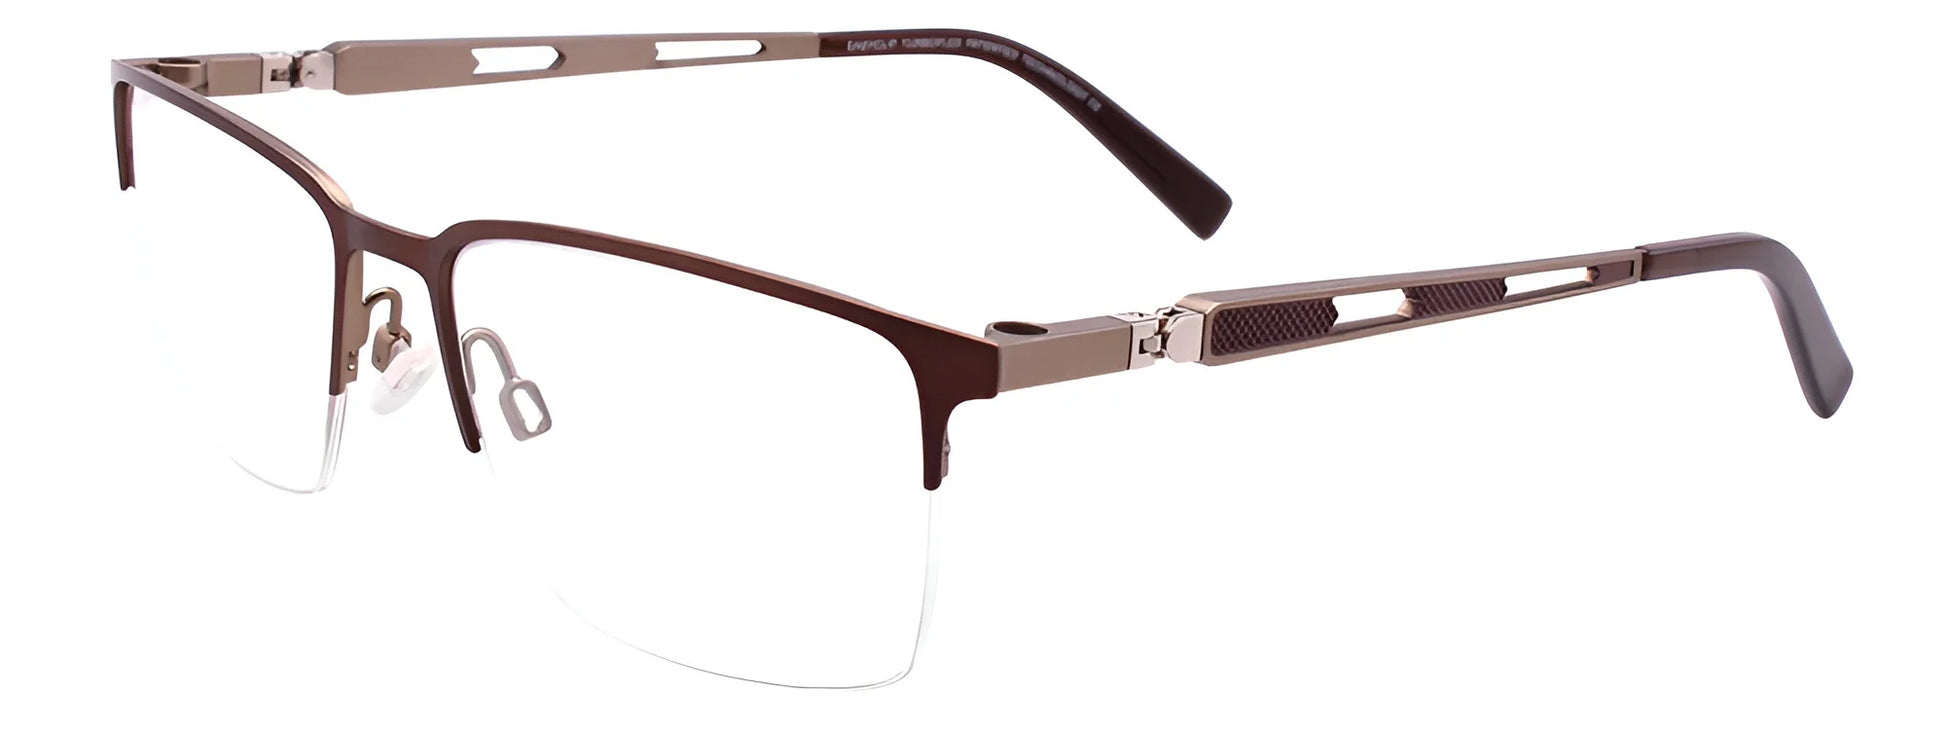 EasyClip EC459 Eyeglasses with Clip-on Sunglasses Matt Dark Brown & Light Gold